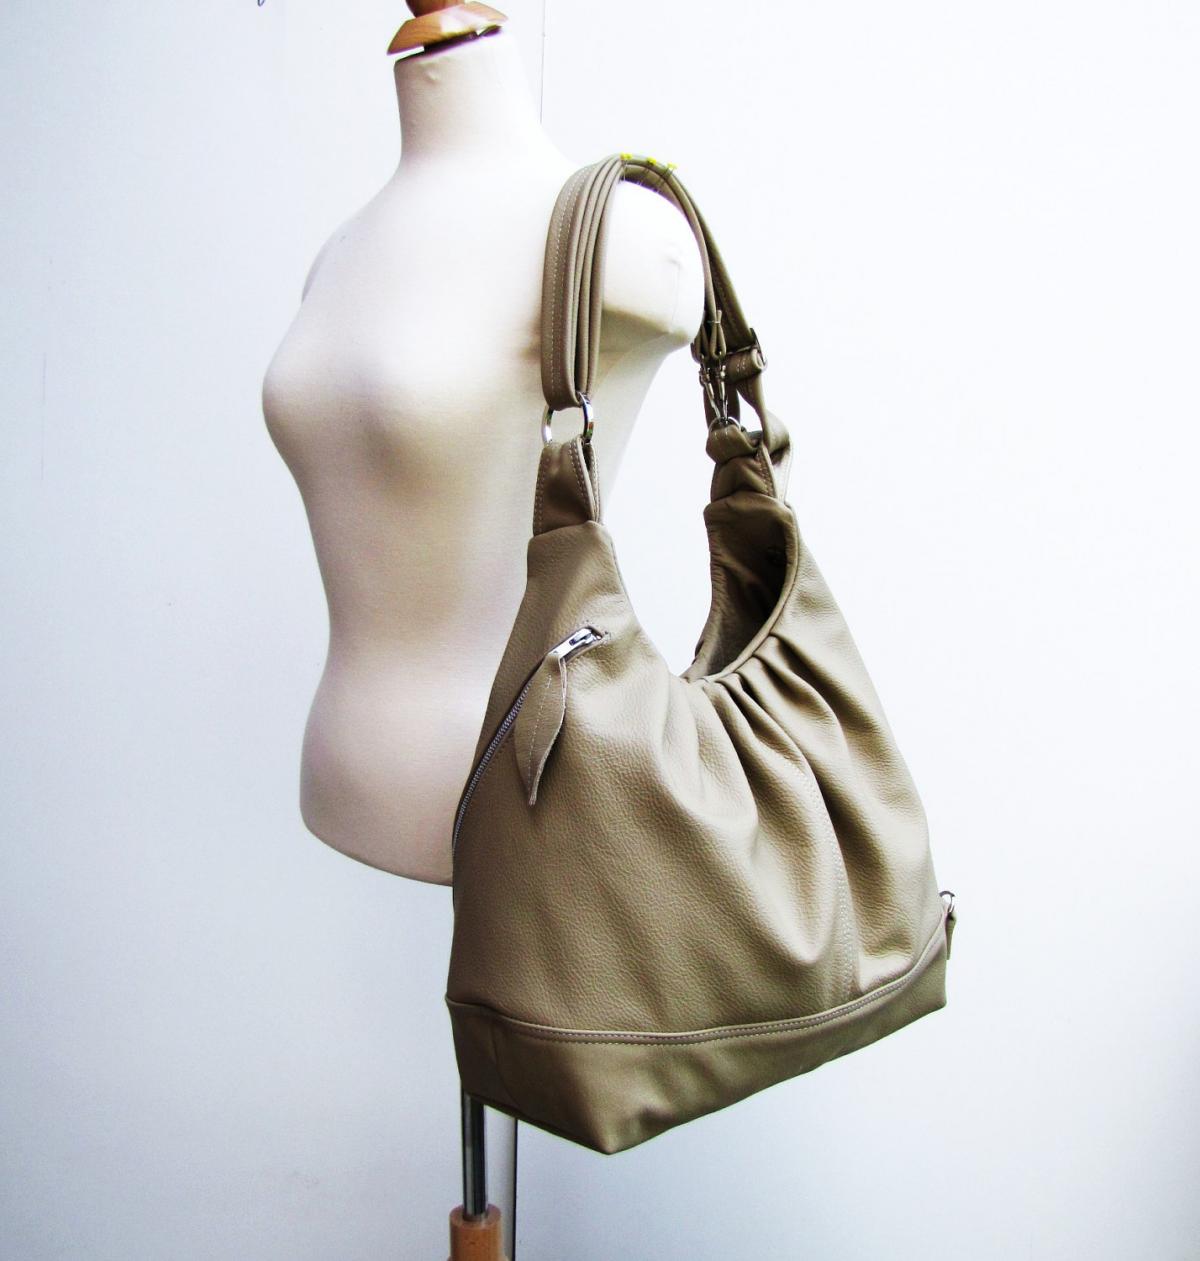 Large Leather Bag 3 Way Convertible Backpack Purse - Light Khaki